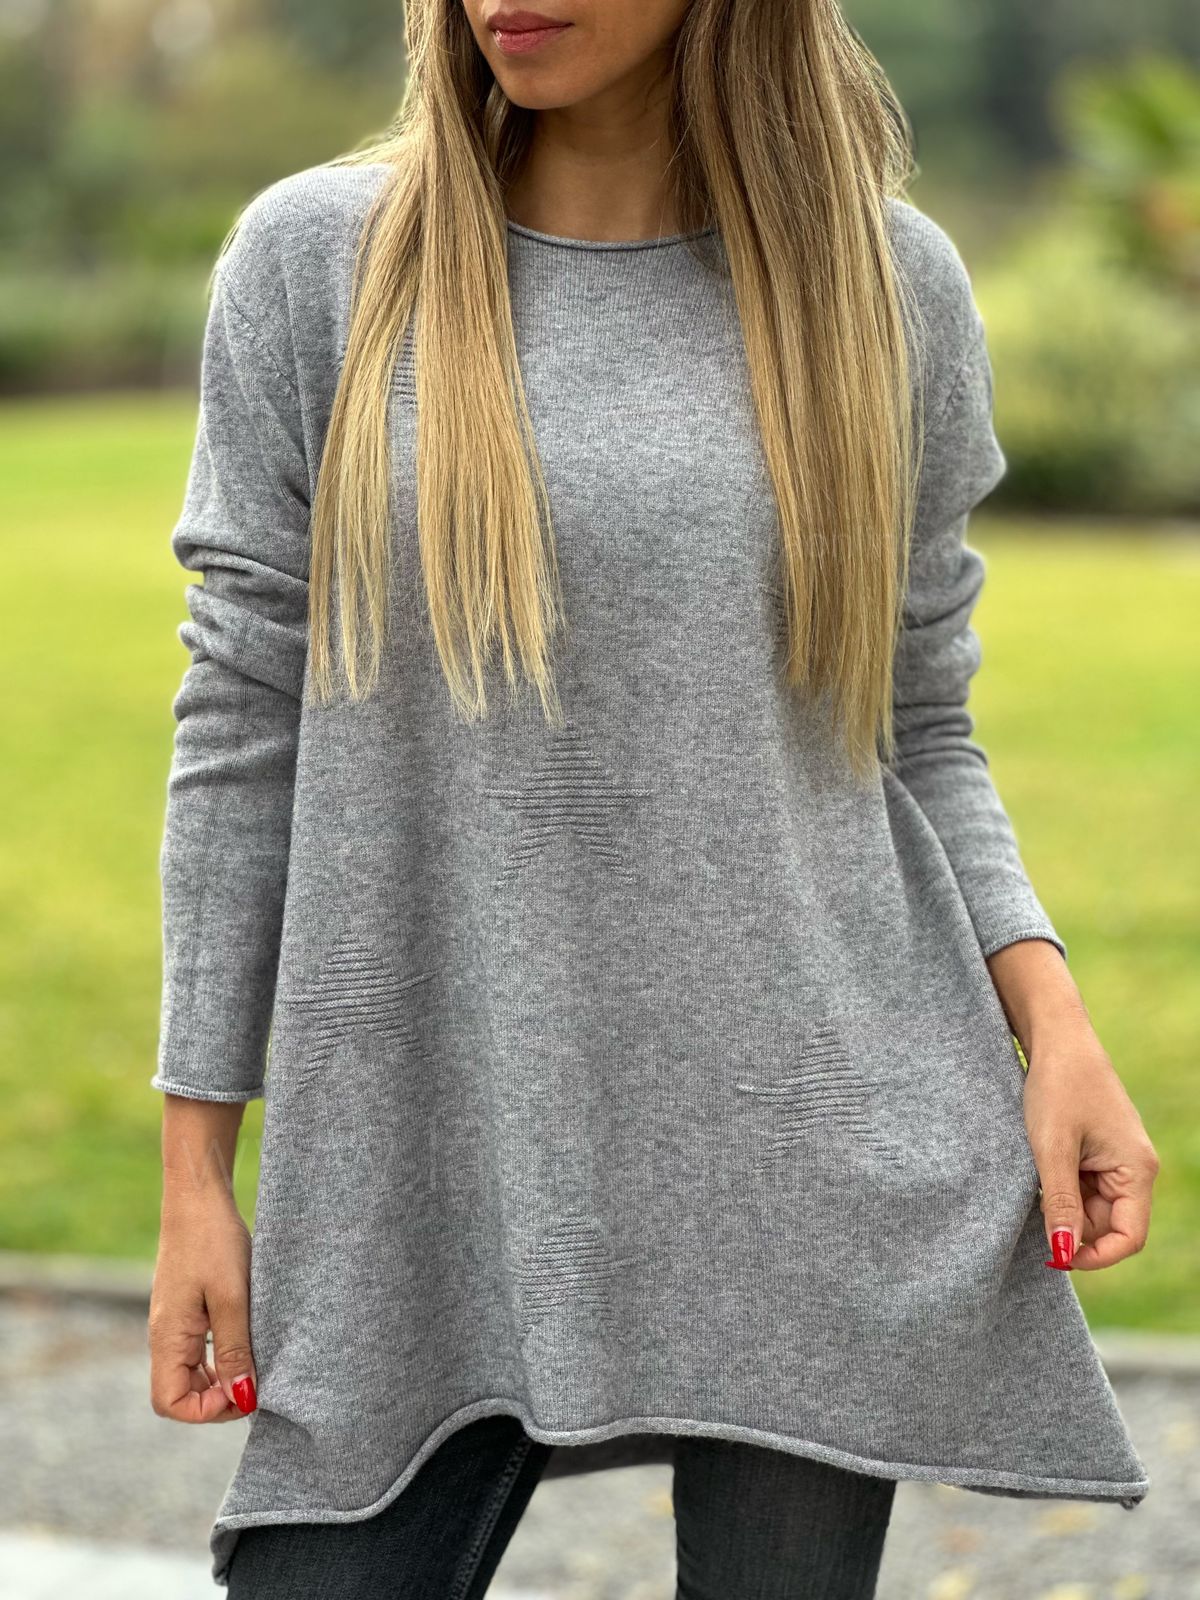 Sweater Star textura gris